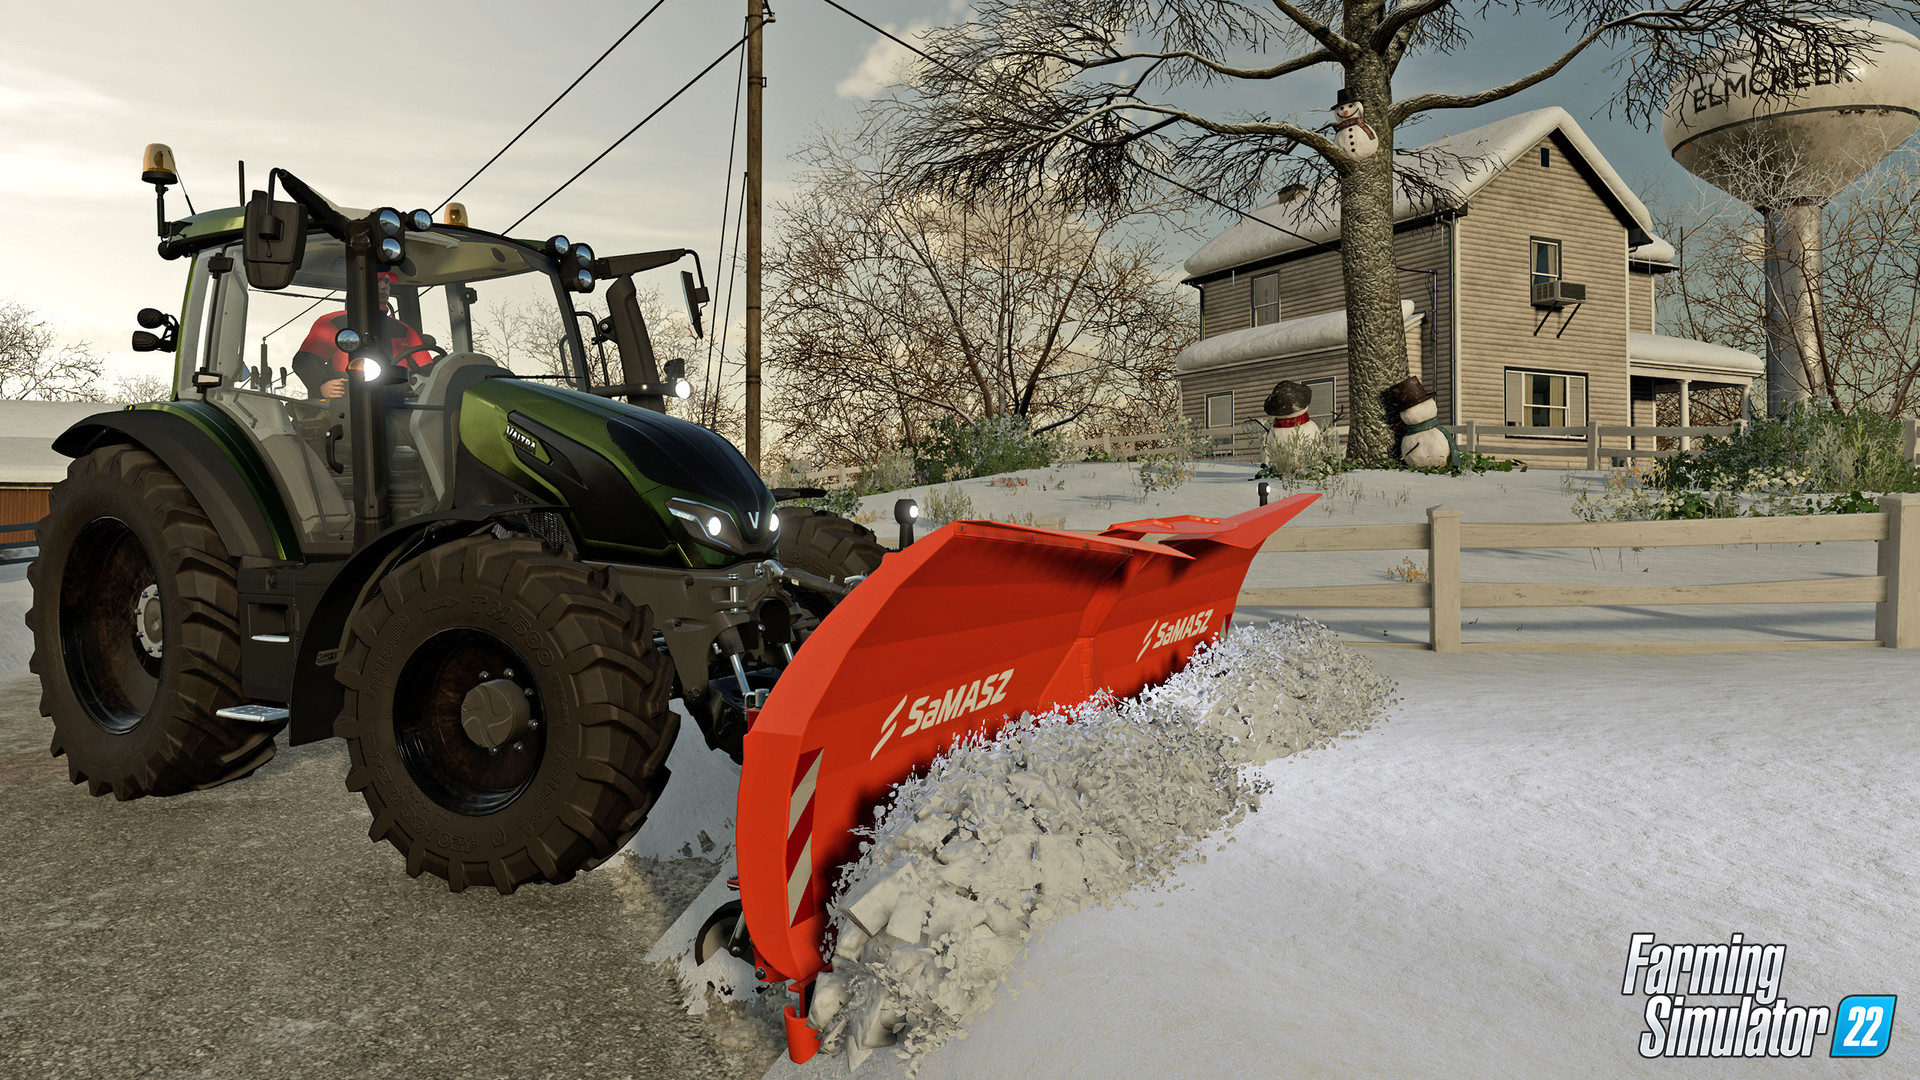 FS 23 Massey Ferguson Tractor Mod Apk  farming simulator 23 new holland  tractor mods 